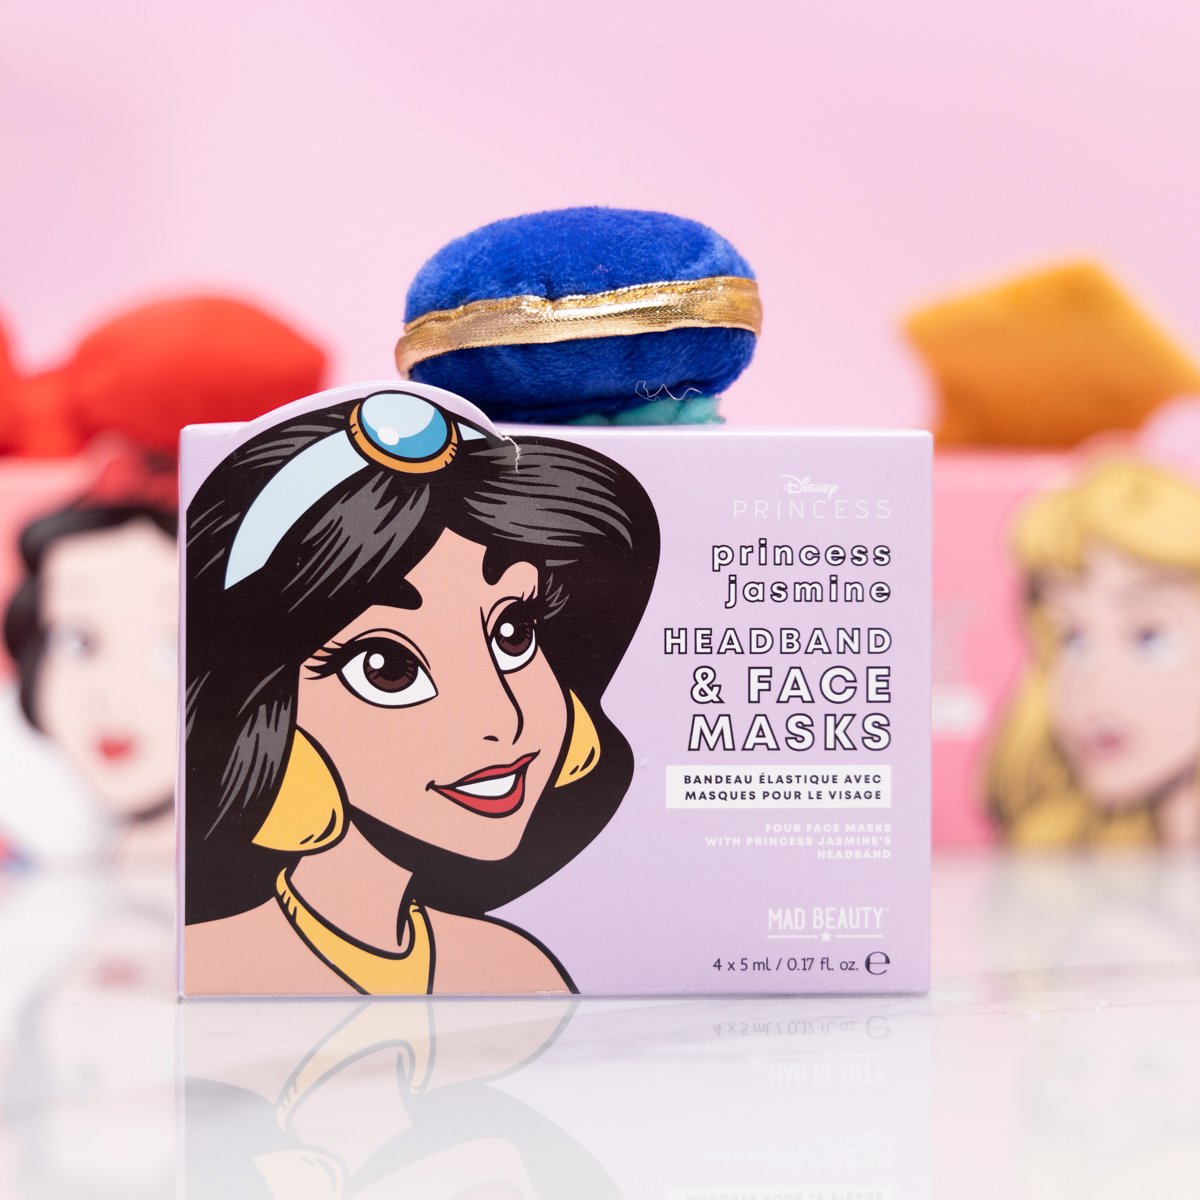 Disney Princess Face Mask and Headband